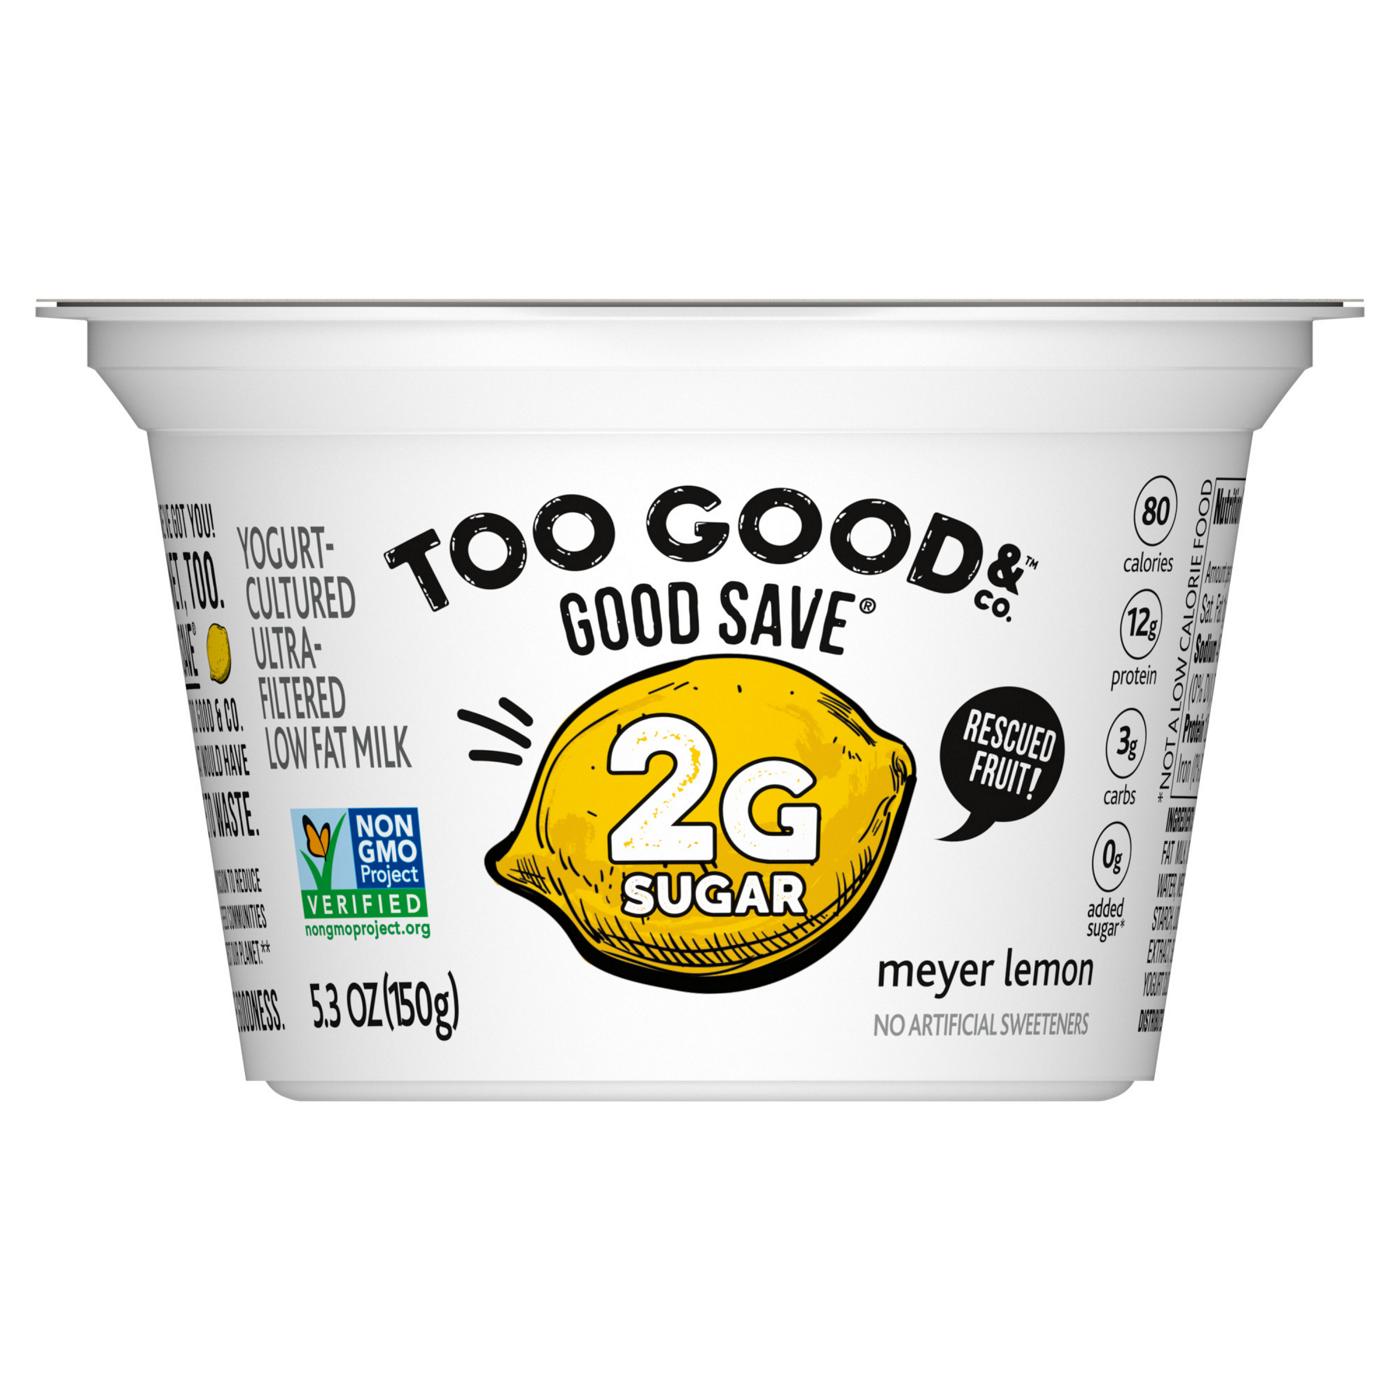 Too Good & Co. Good Save Lower Sugar Yogurt - Meyer Lemon ; image 1 of 6